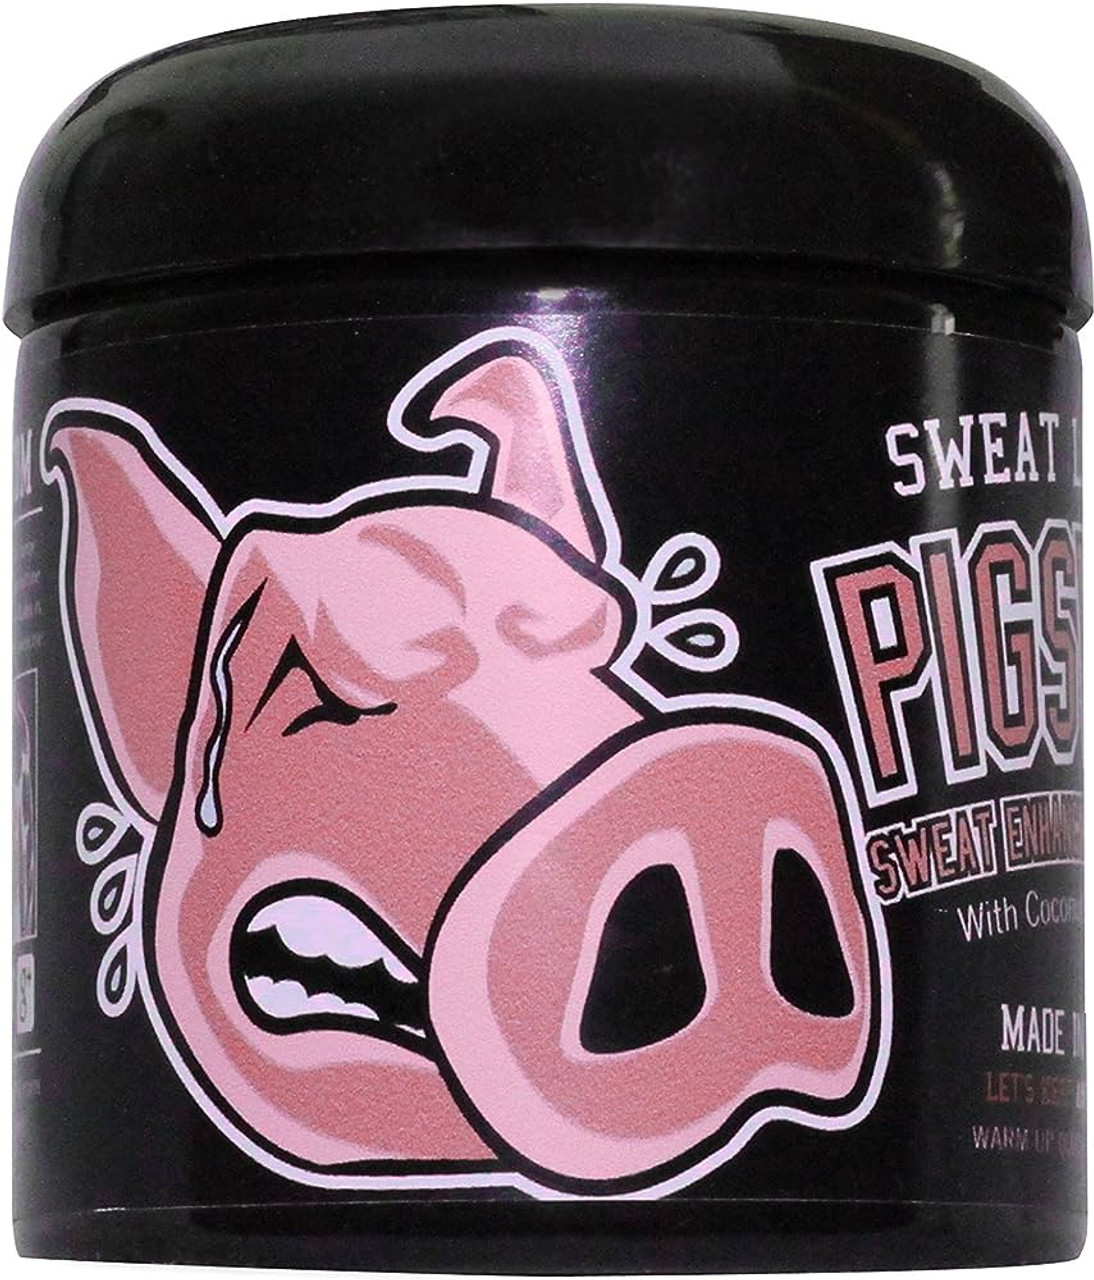 Pig Sweat (8 Oz.) Sweat Cream Workout Enhancer